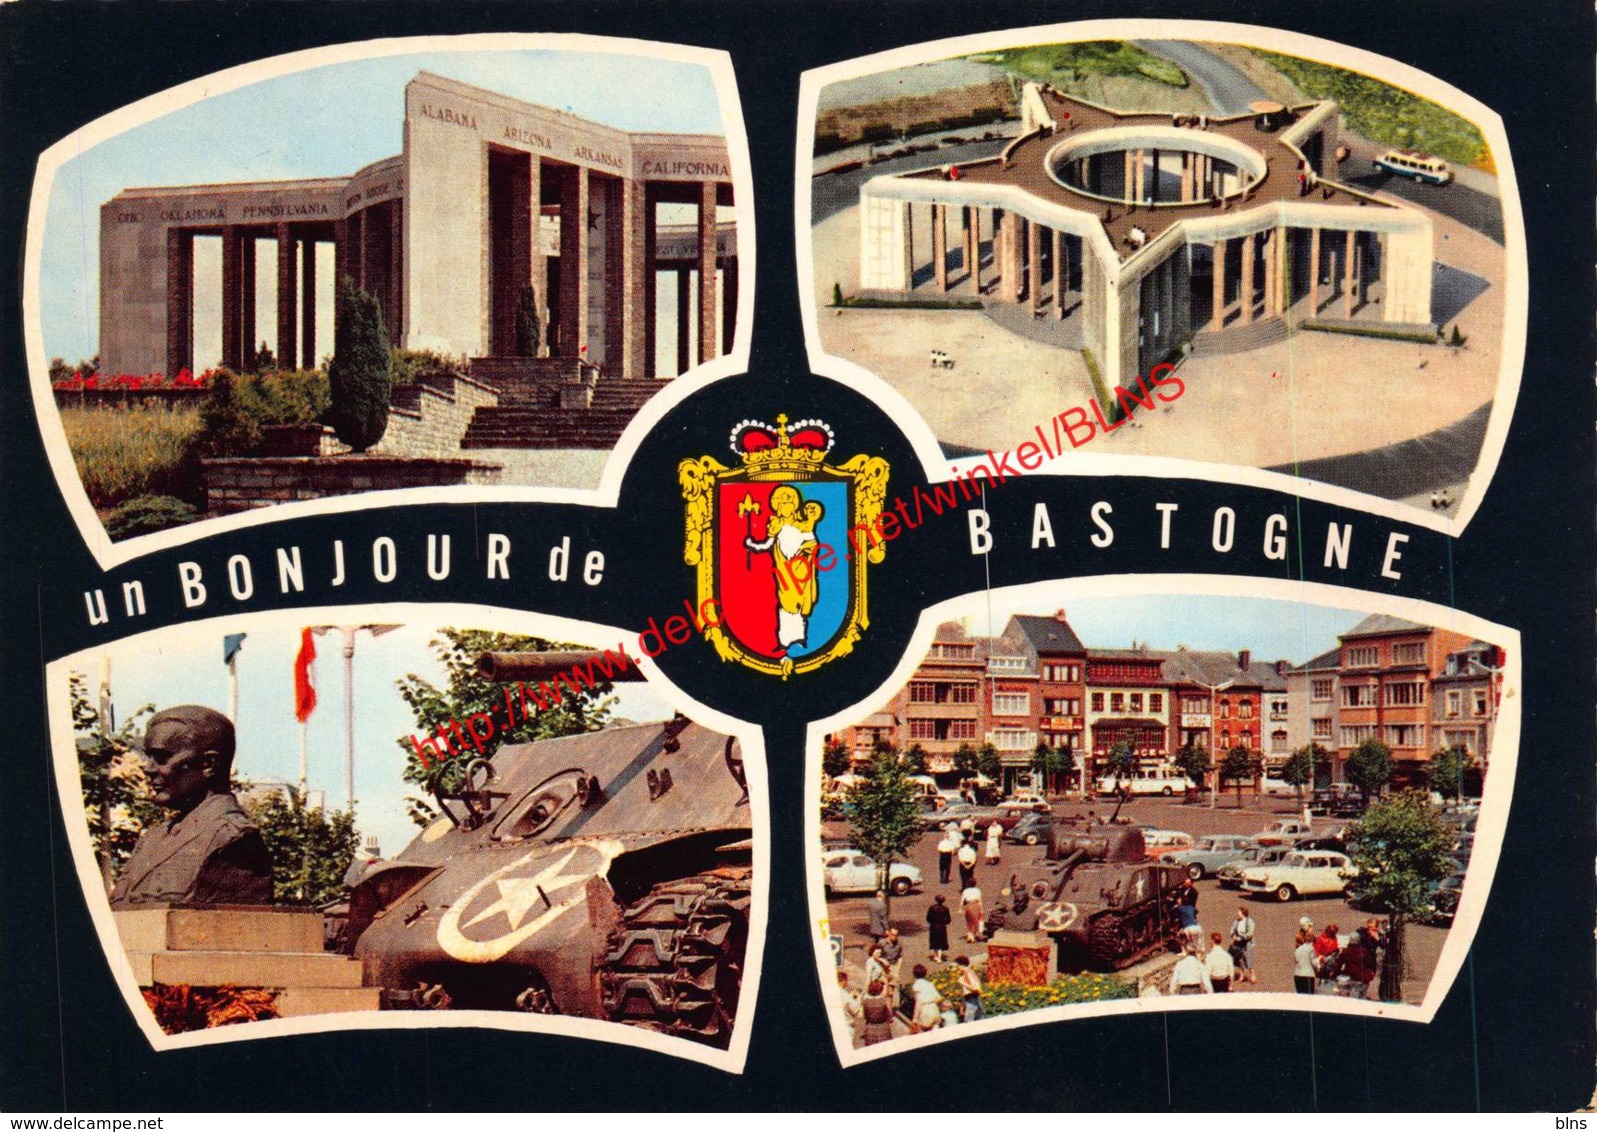 Un Bonjour - Bastogne - Bastenaken